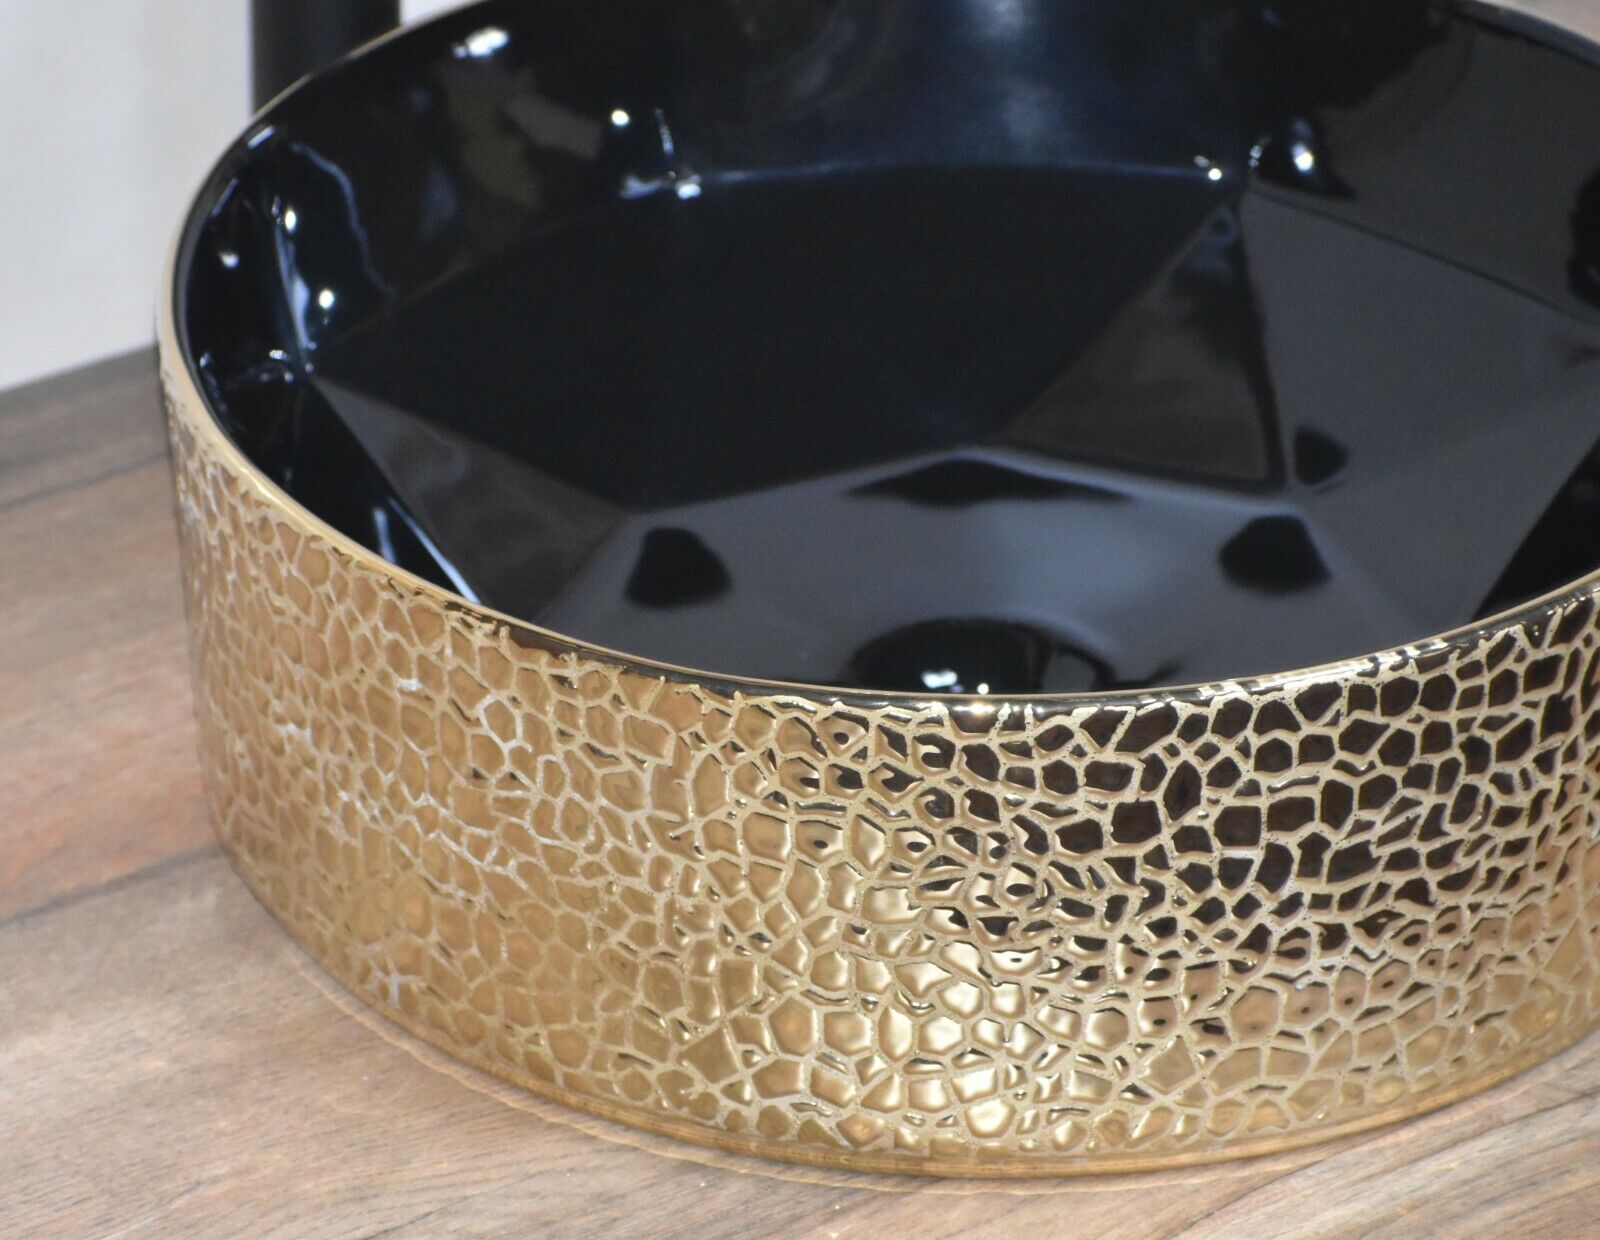 InArt Ceramic Round Shape Above Counter Top Wash Basin Bathroom Porcelain Vessel Sink Bowl For Lavatory/Bathroom 33 x 33 x 12 Cm Gold Black Color - InArt-Studio-USA